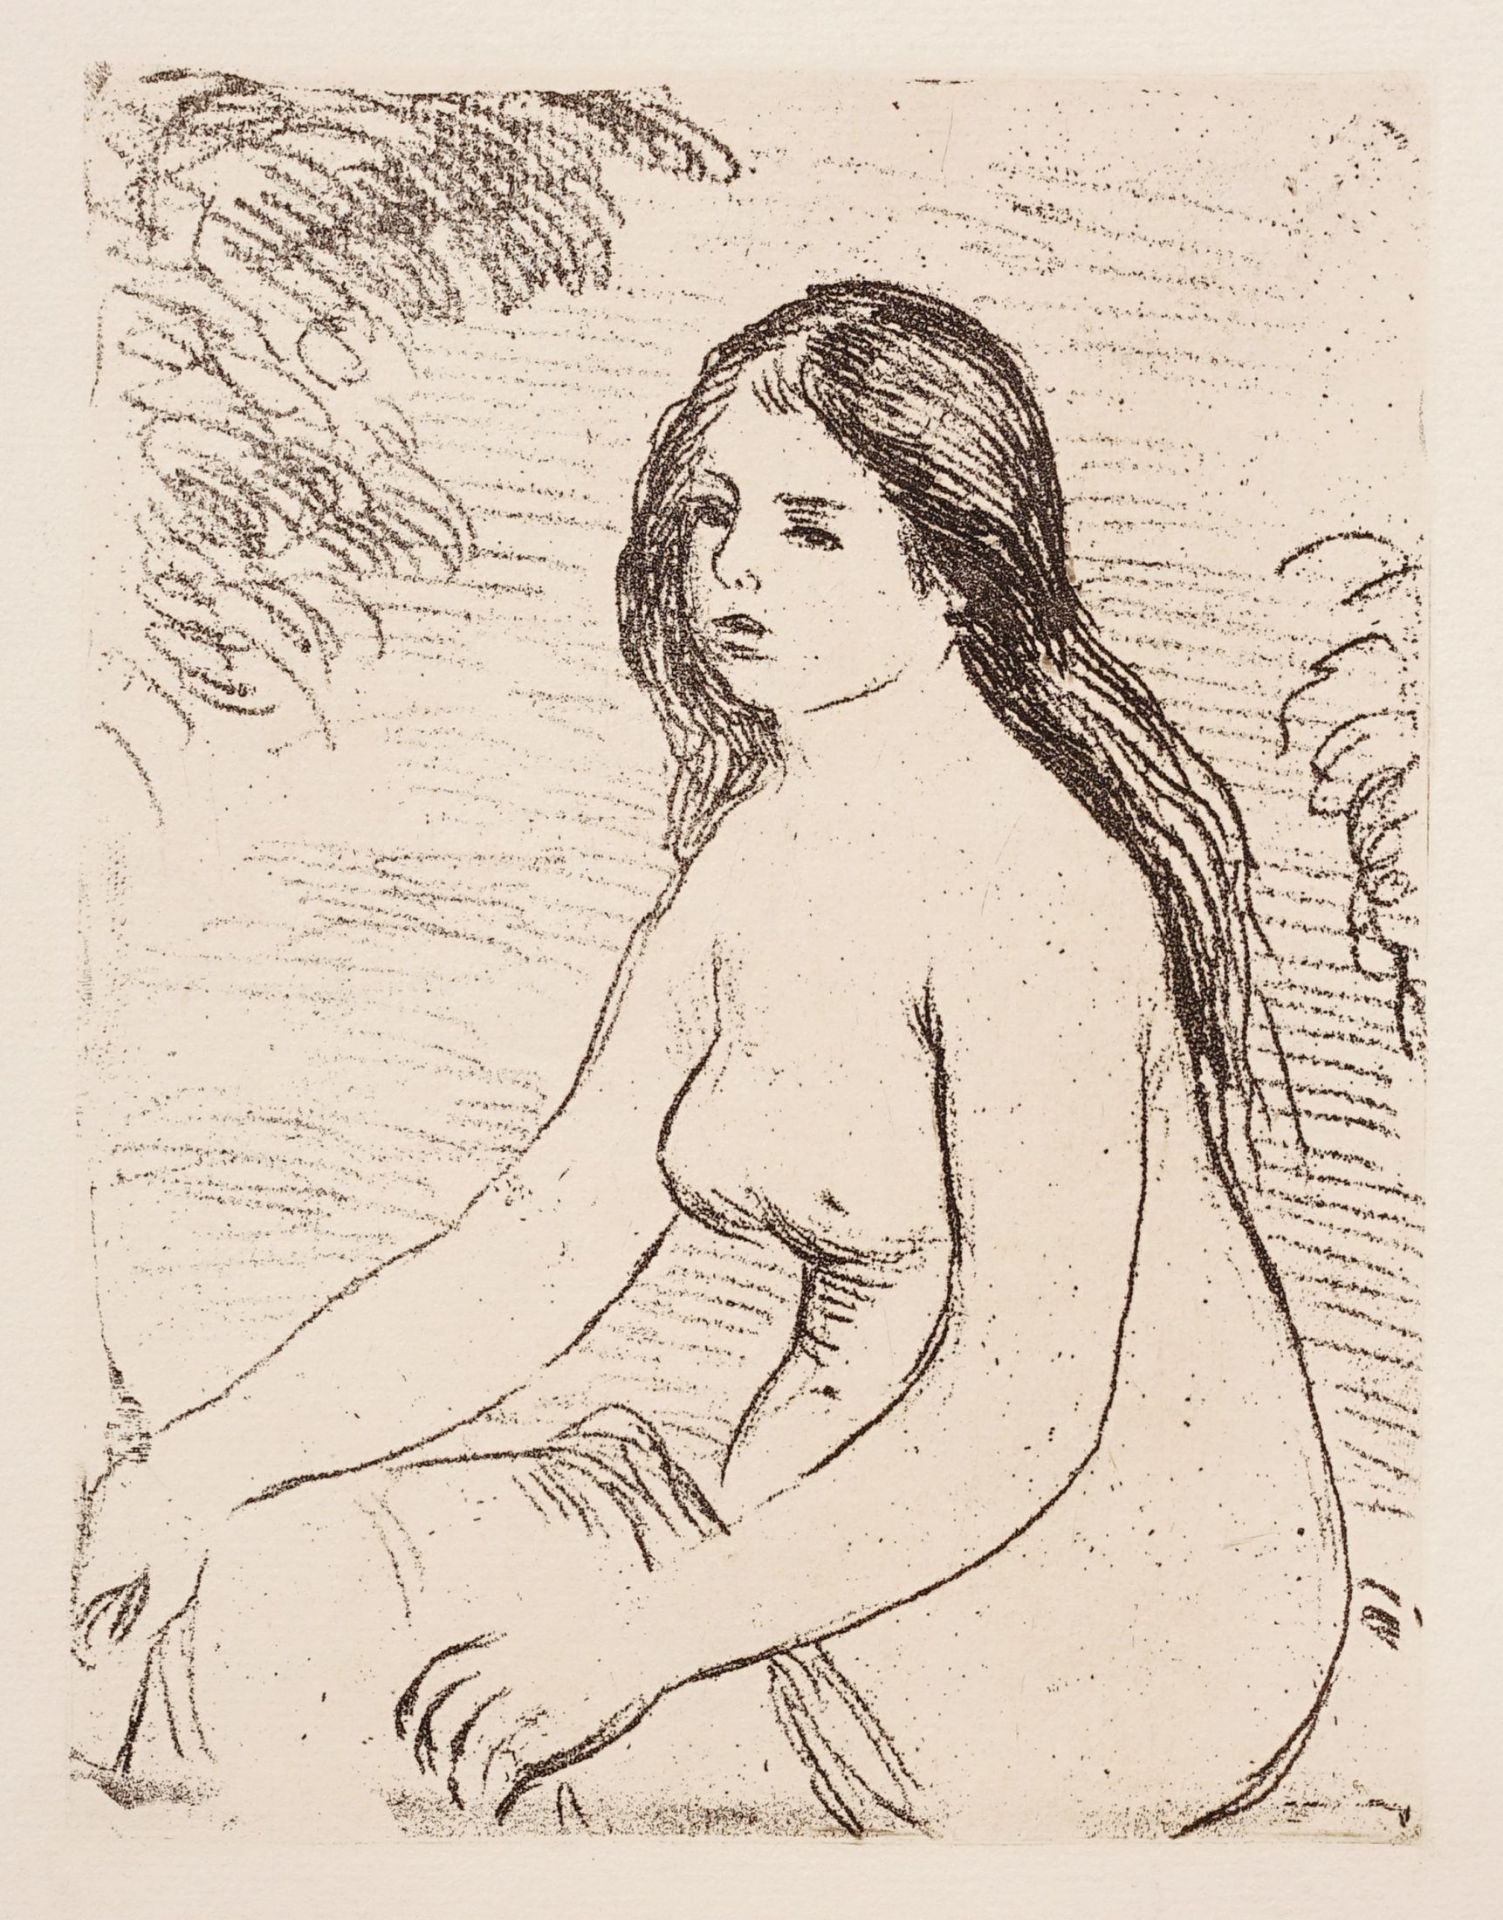 Pierre Auguste Renoir "Femme nue assise". 1906.